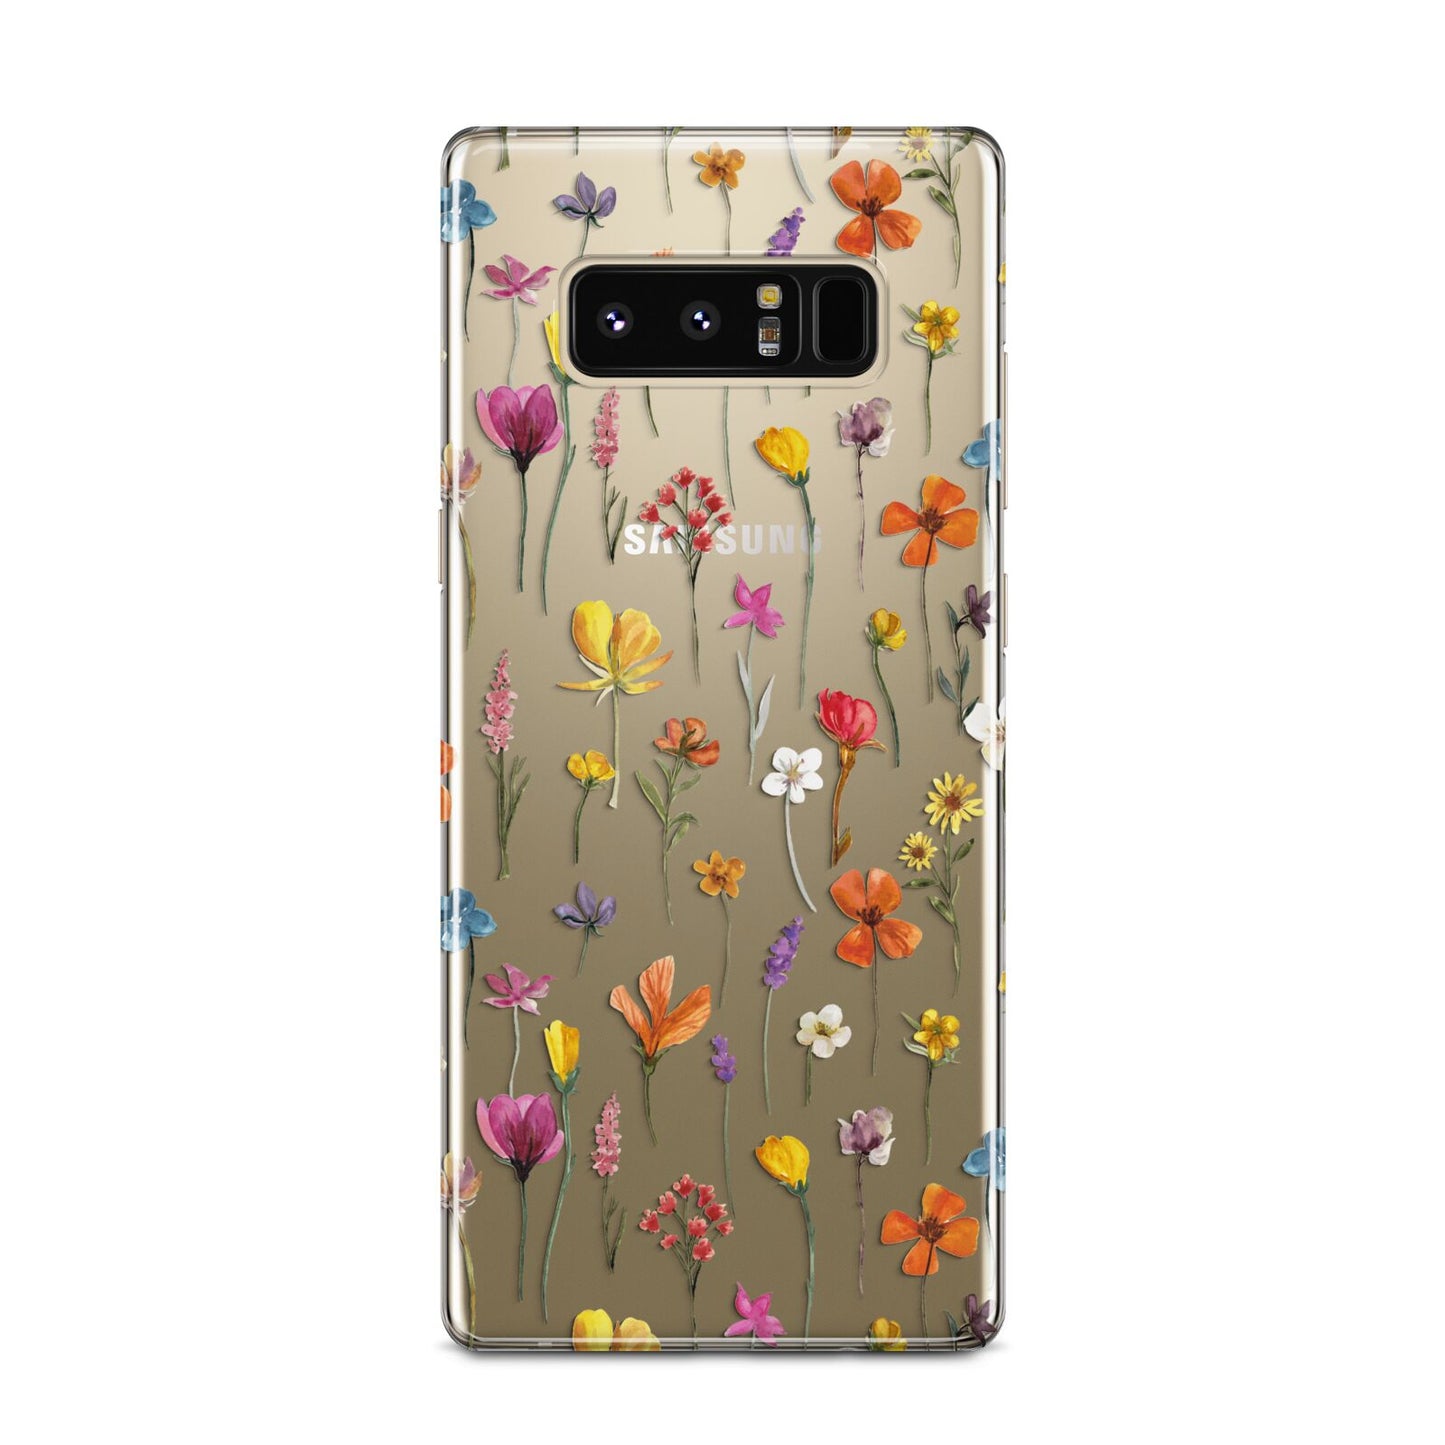 Botanical Floral Samsung Galaxy Note 8 Case